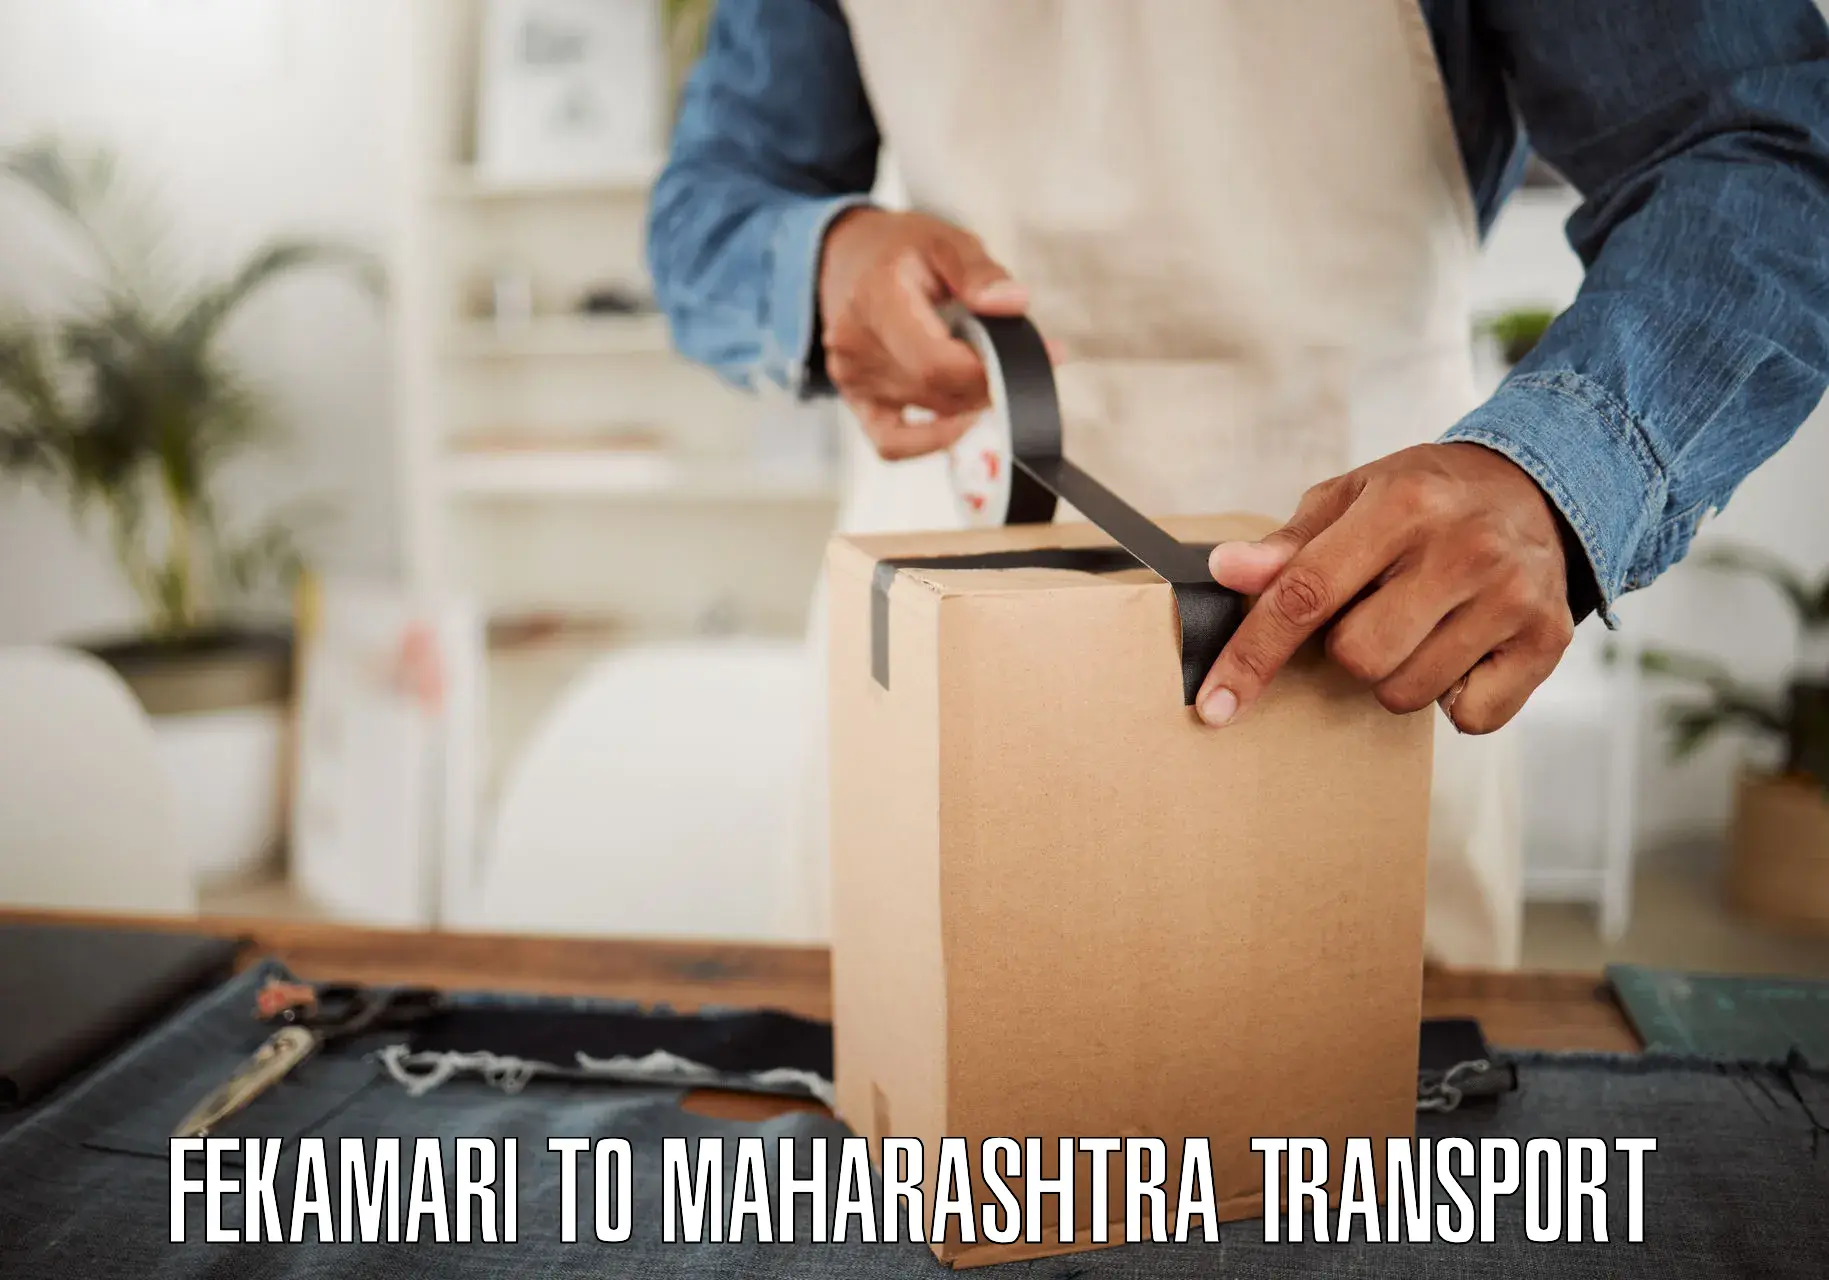 Cycle transportation service Fekamari to Maharashtra